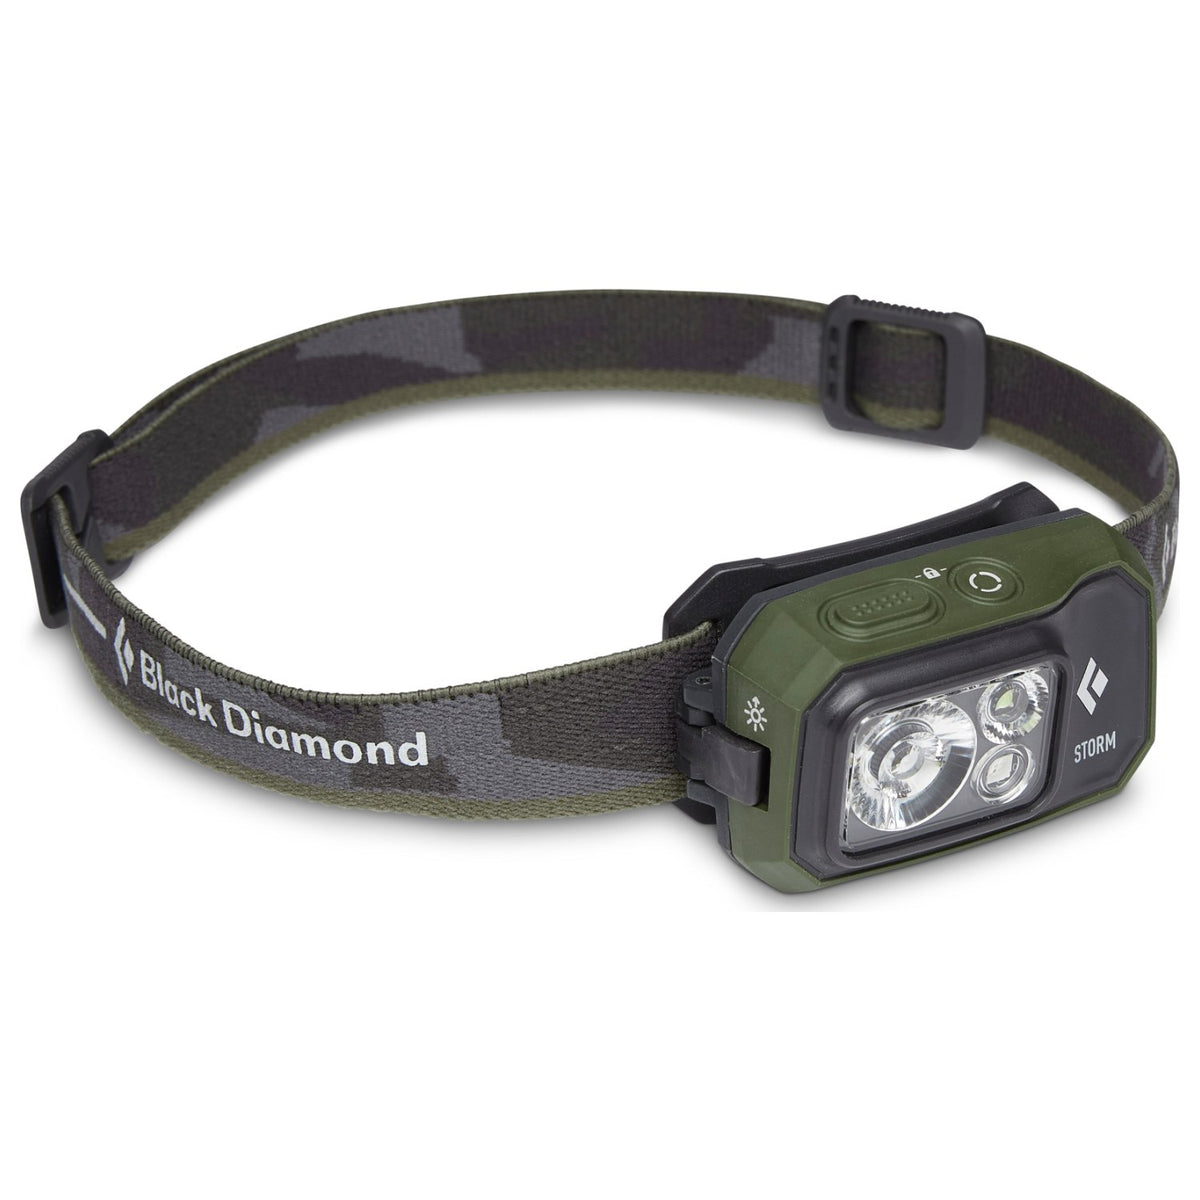 Black Diamond Storm 450 Headlamp